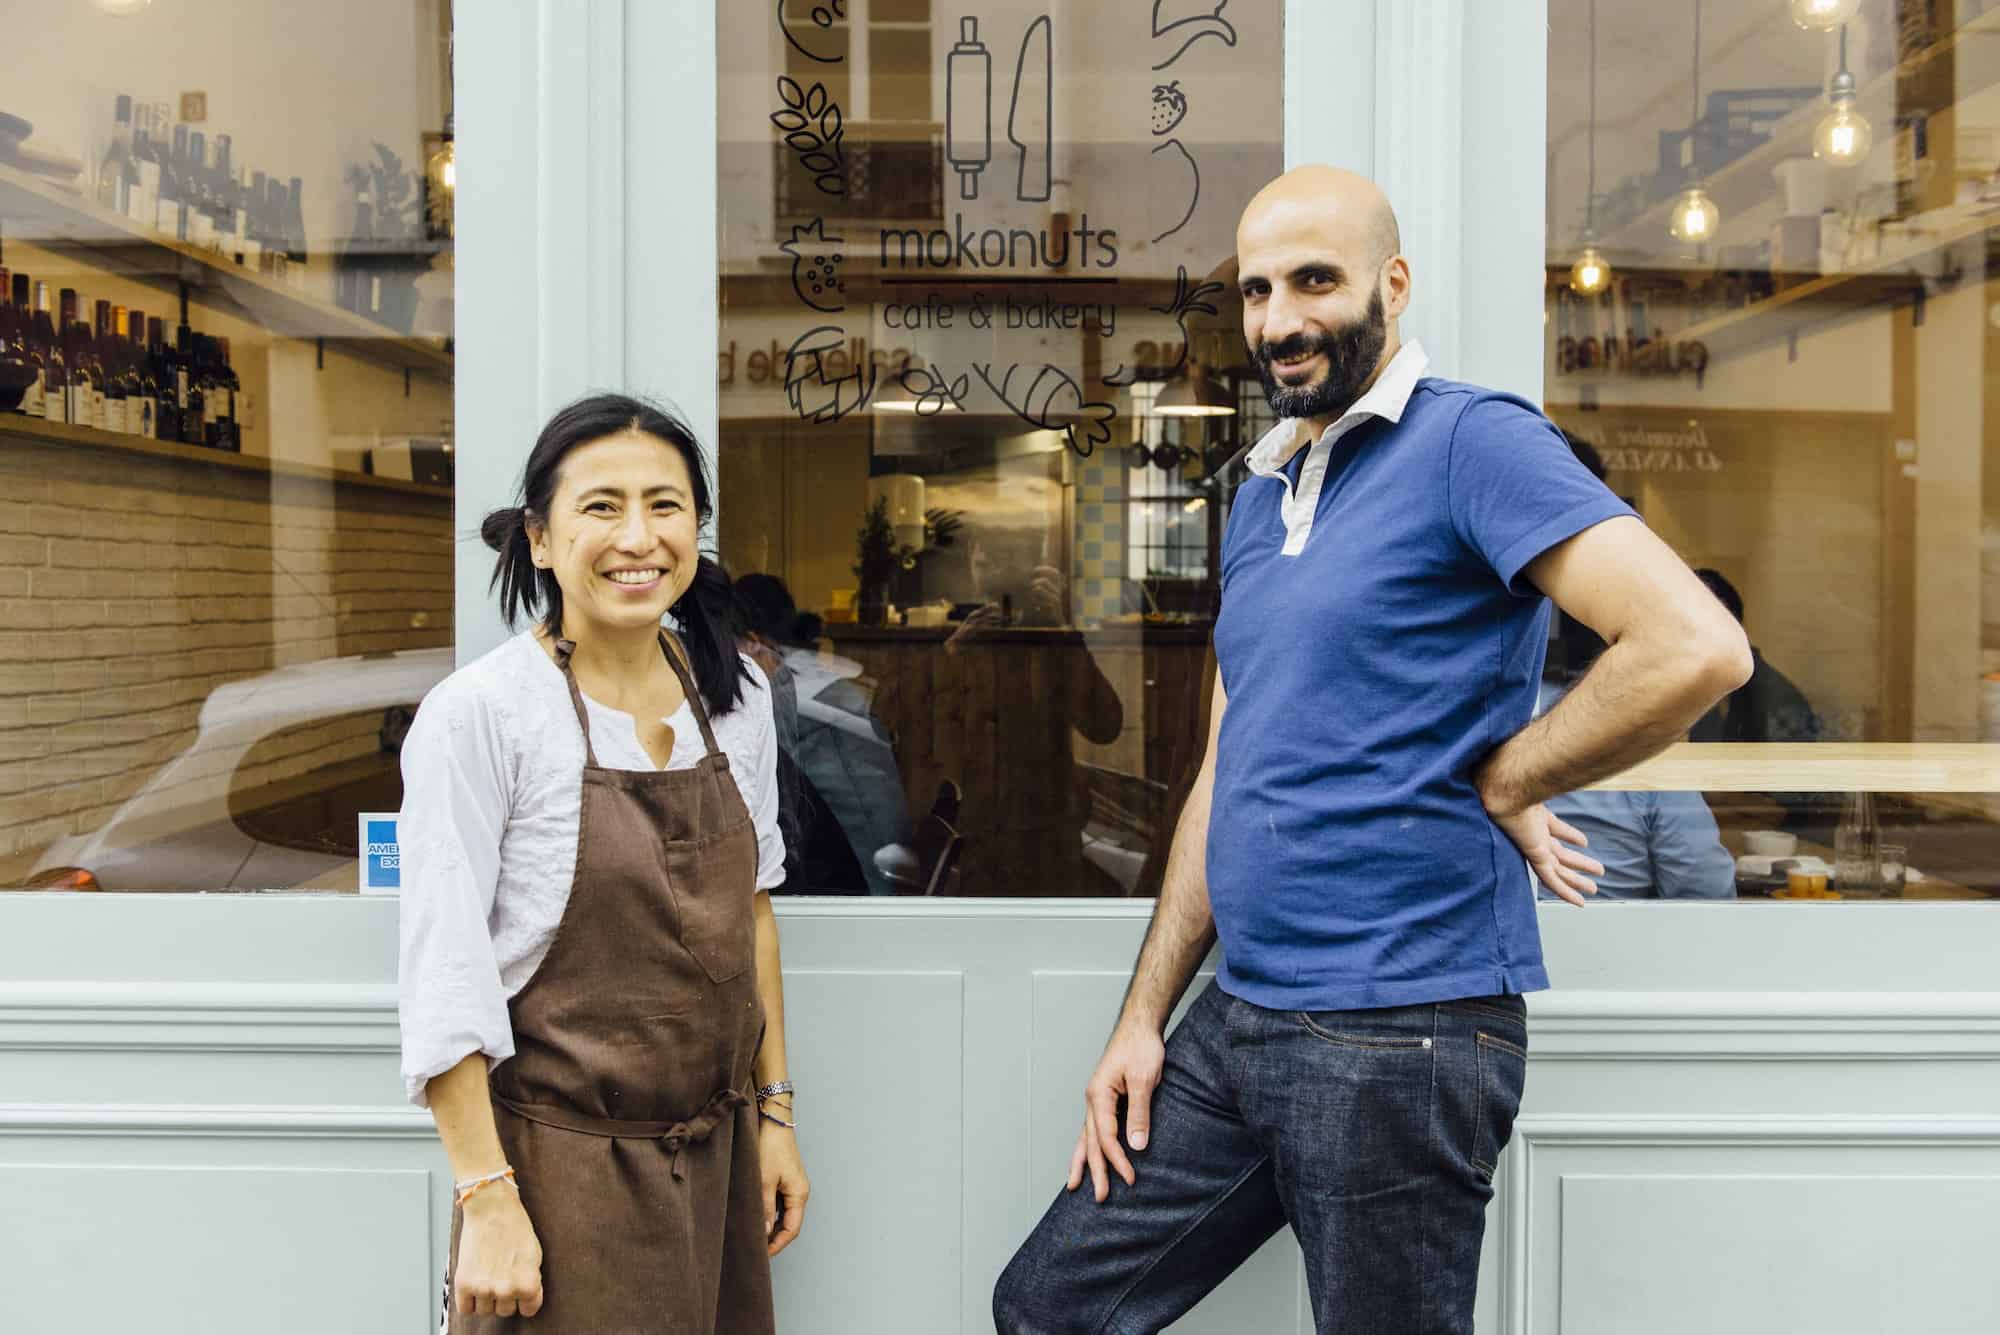 HiP Paris Blog Explores Mokonuts Bakery & Café